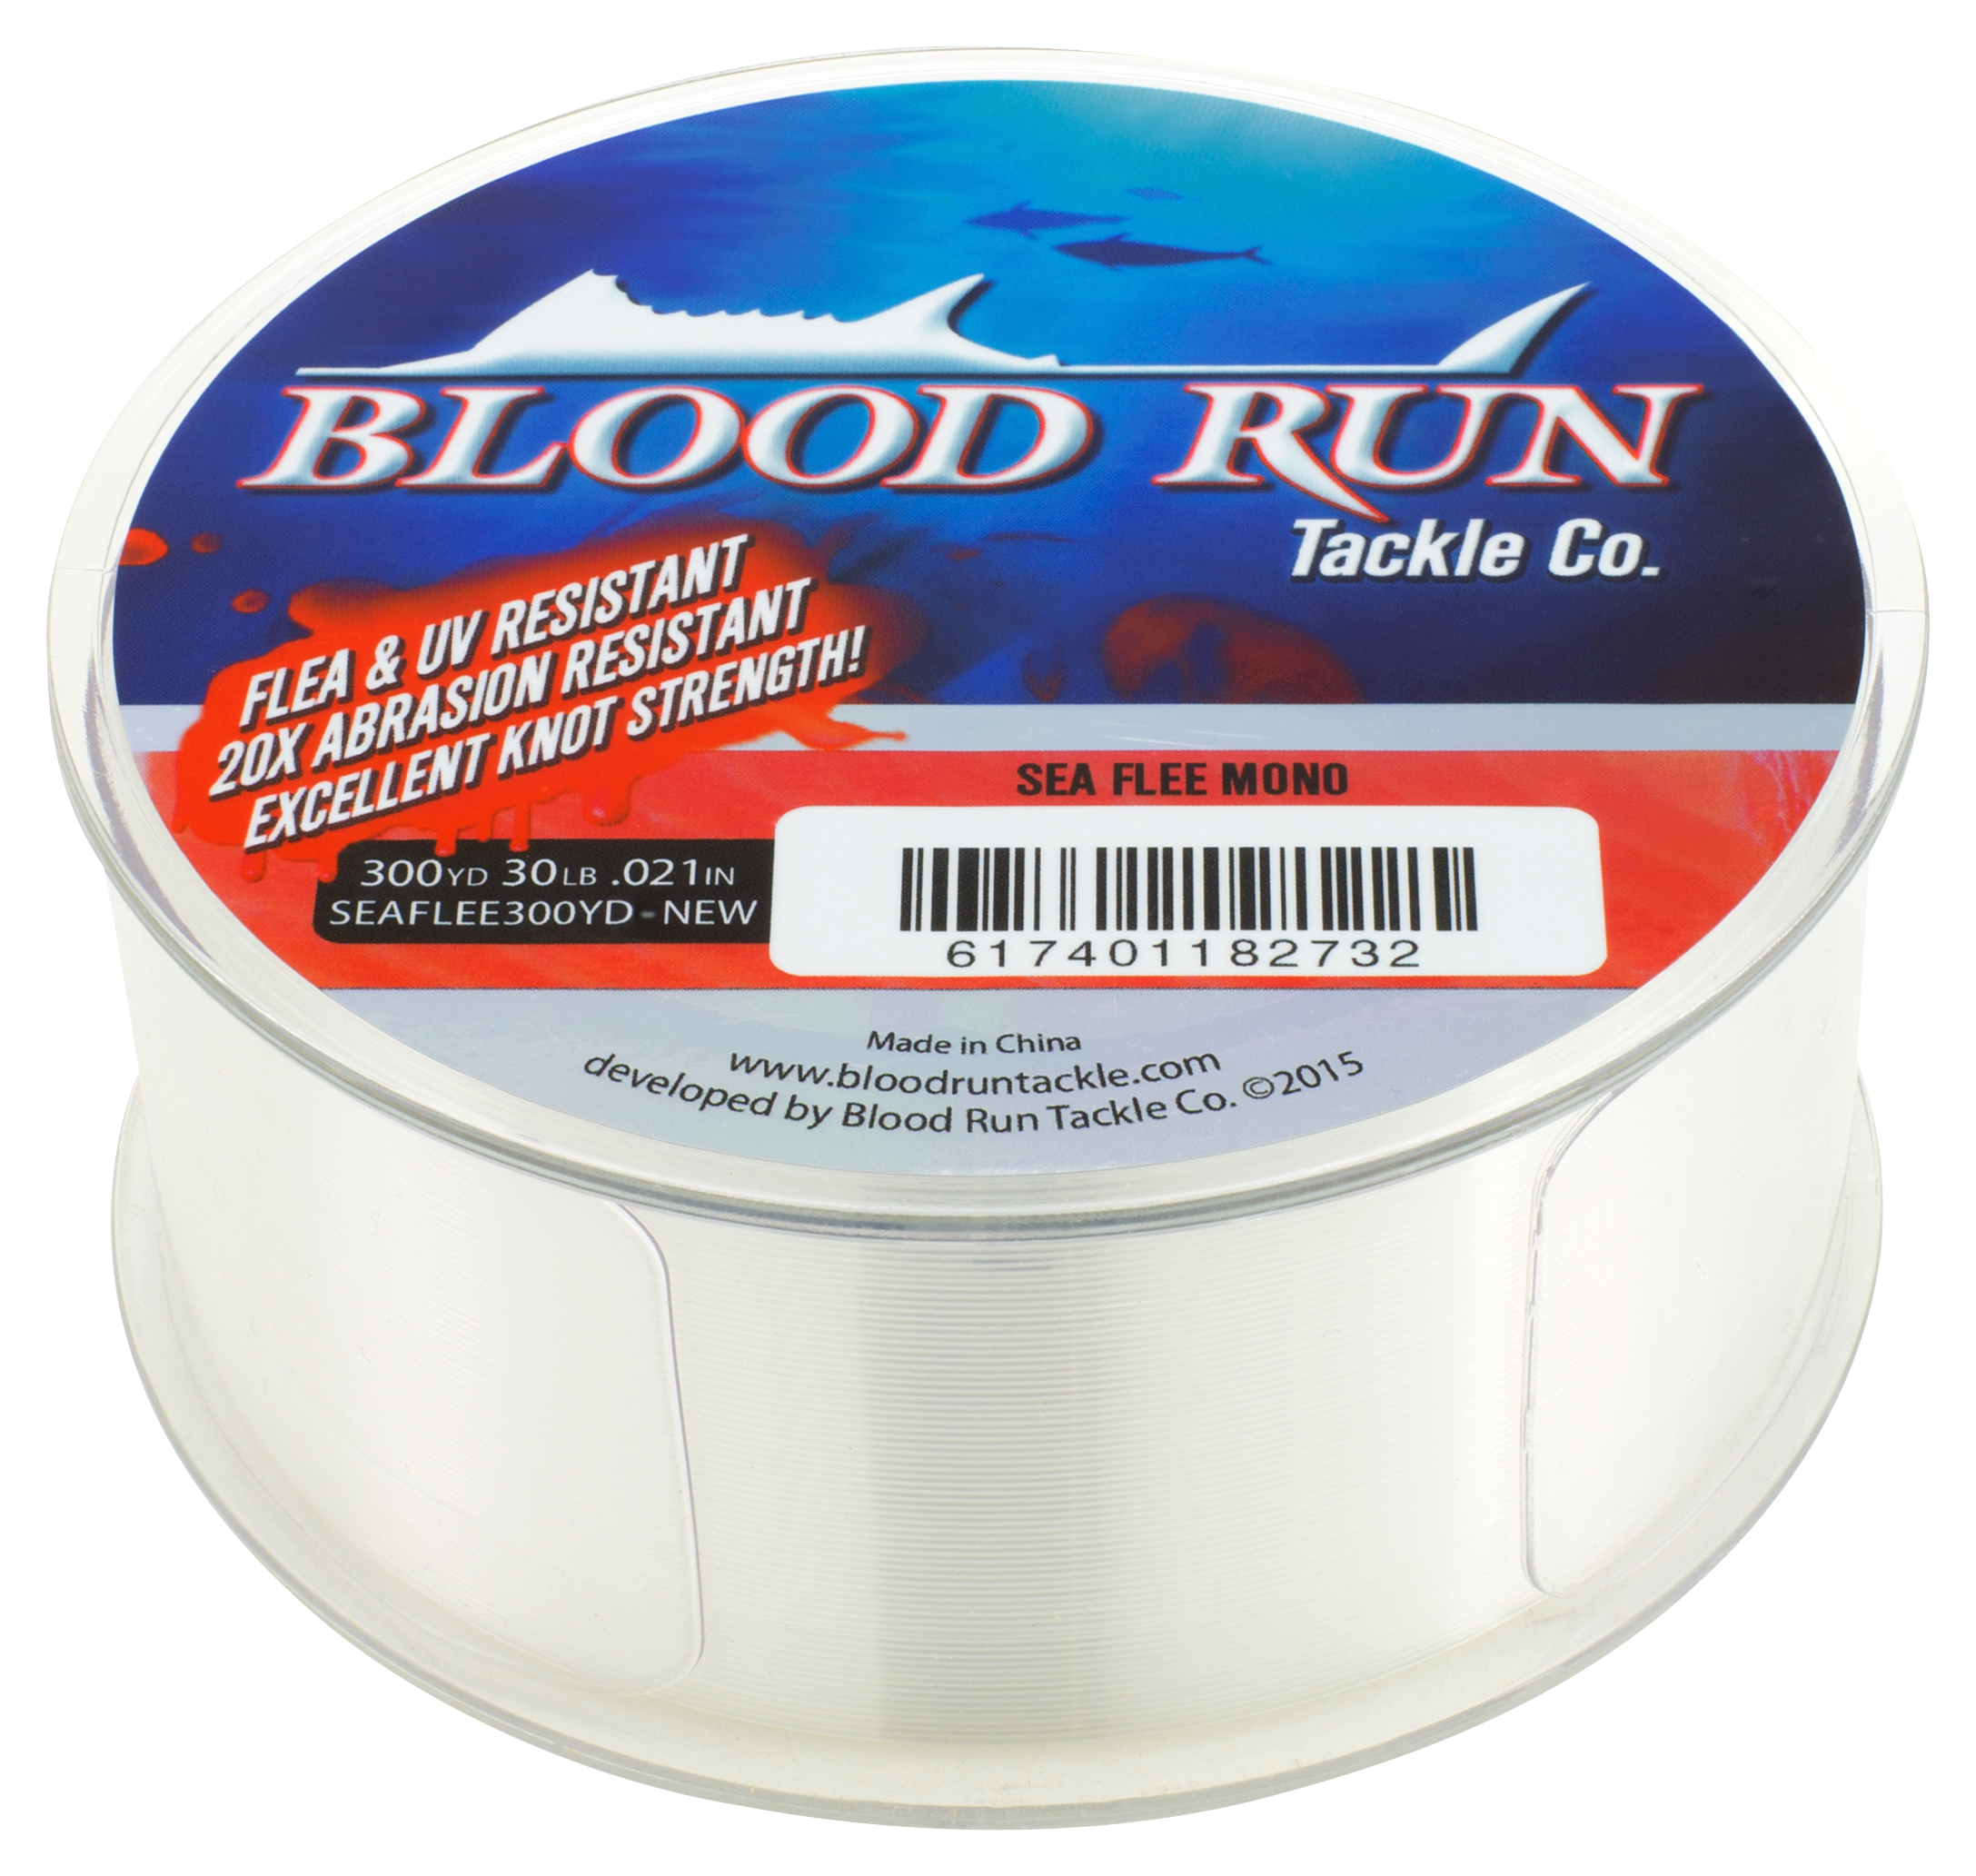 Blood Run Tackle Sea Flee Monofilament Line - 30 lb. 1200 yds.